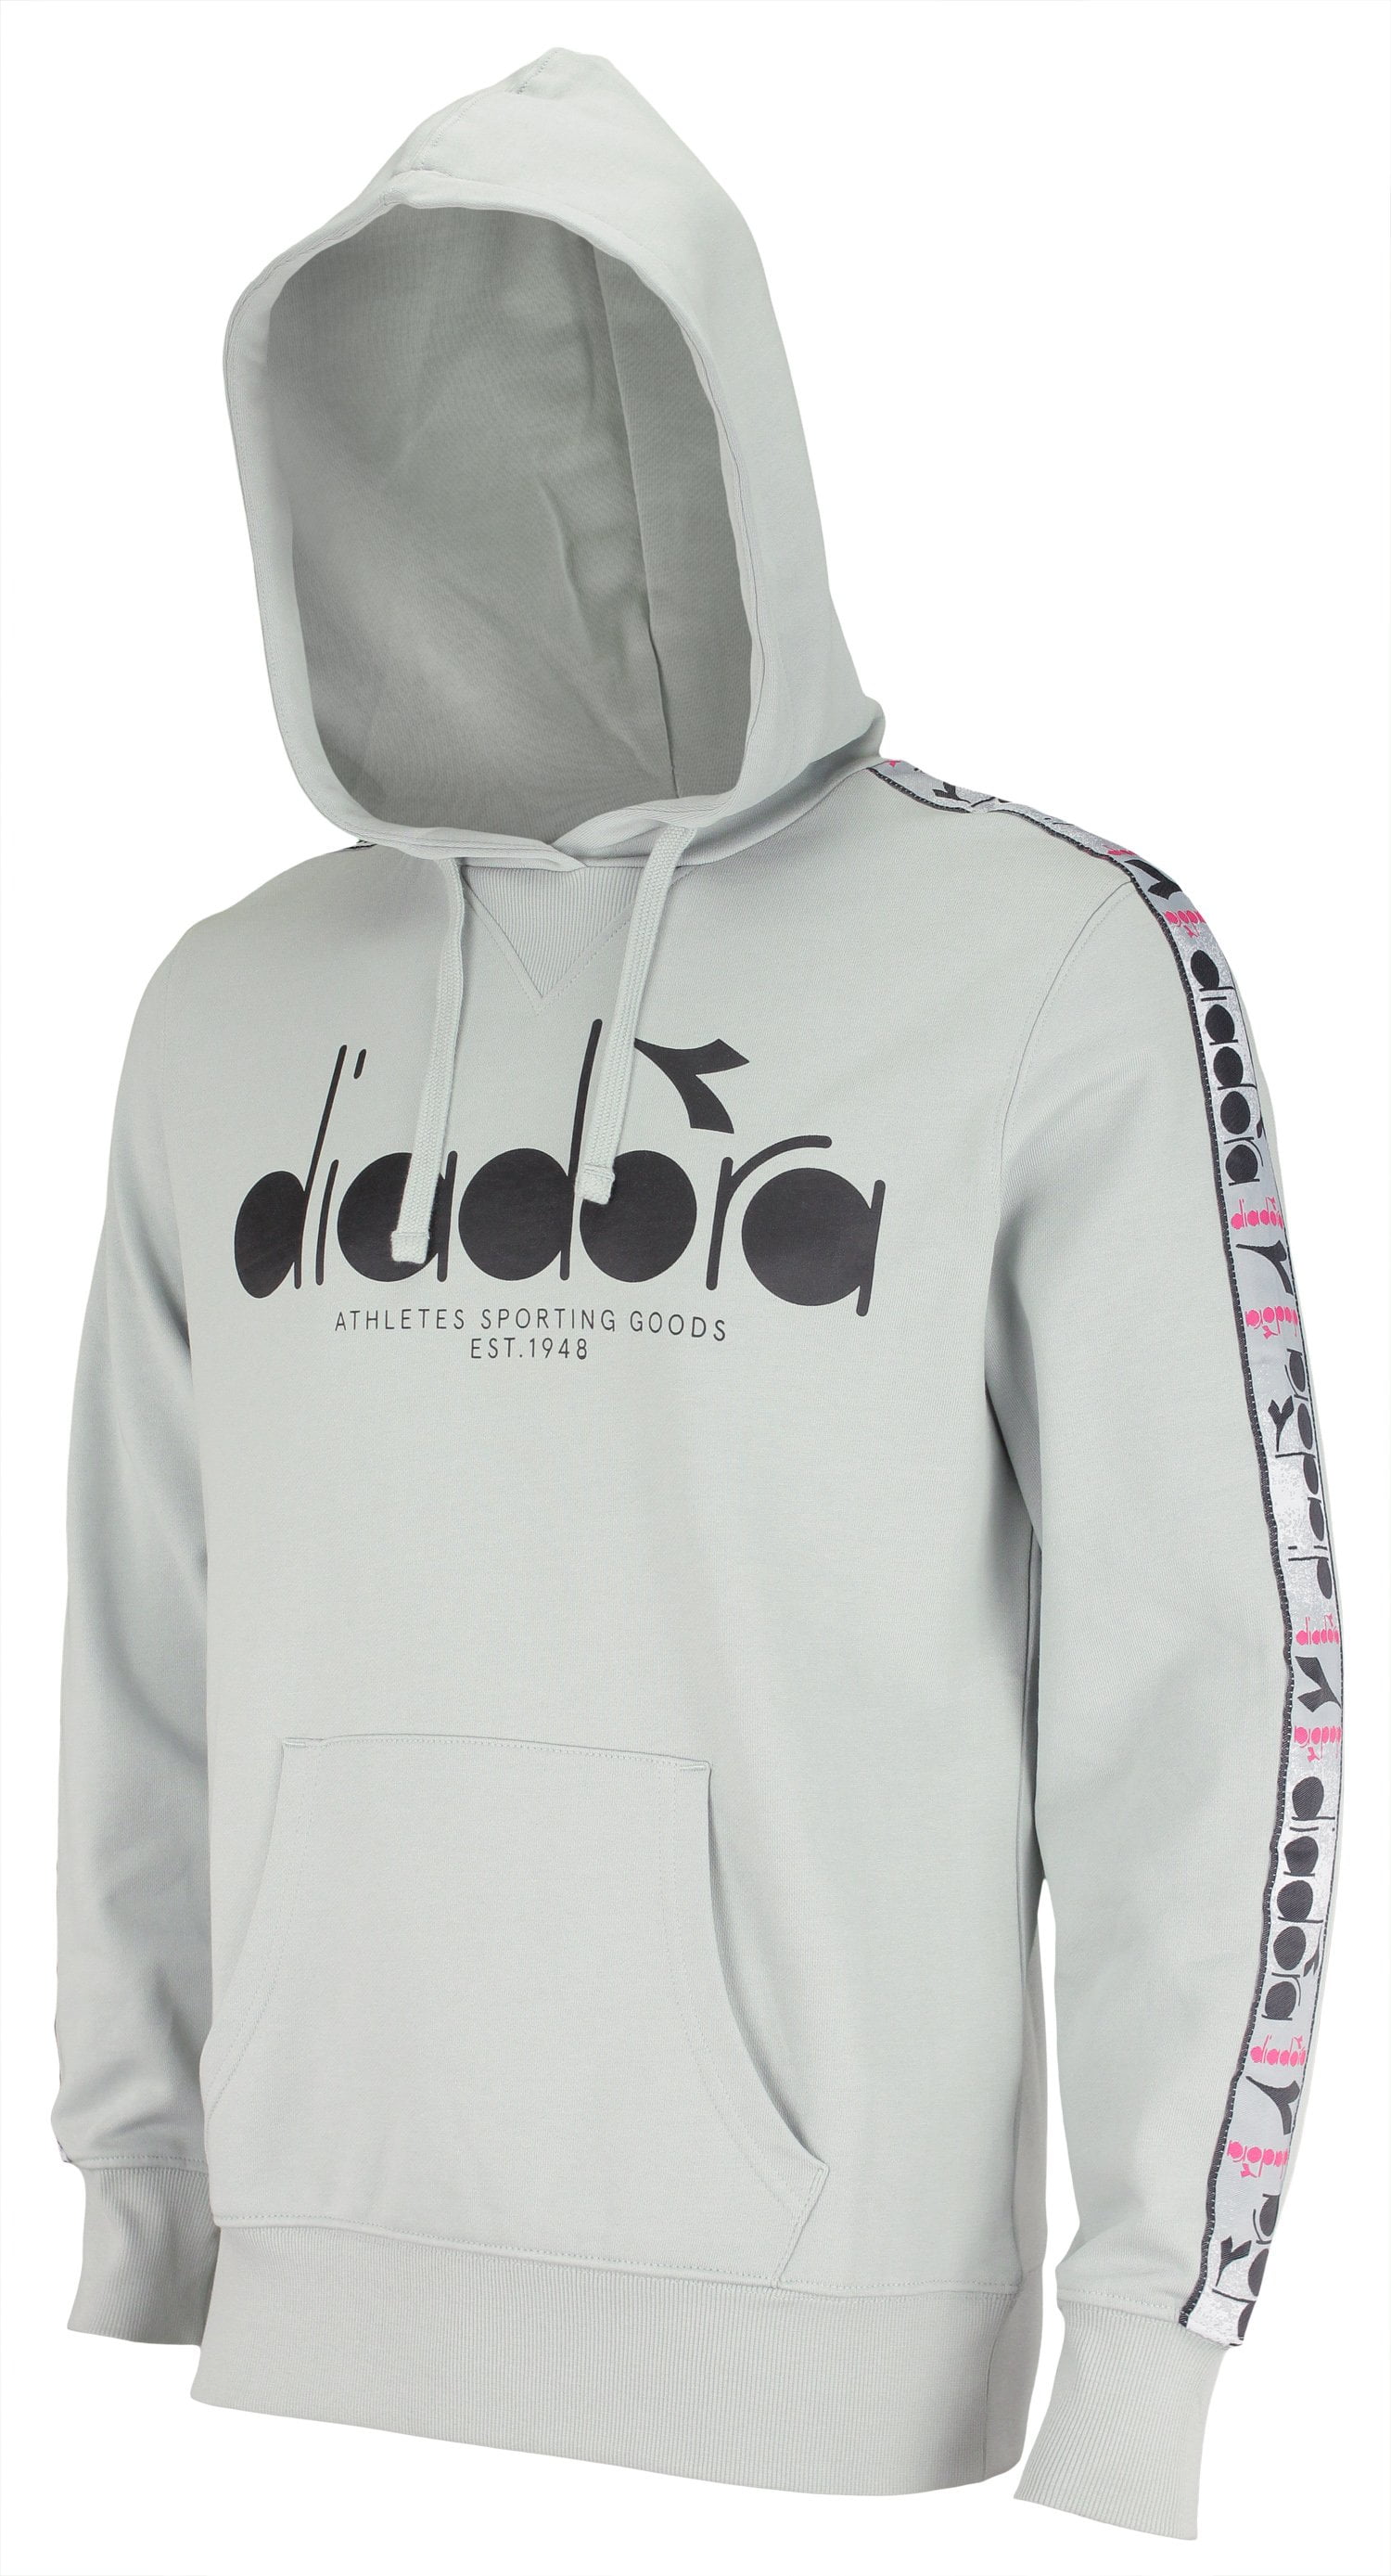 Diadora Womens Hoody White Full Zip Hooded Jacket Casual Stylish Fashion Hoodie 